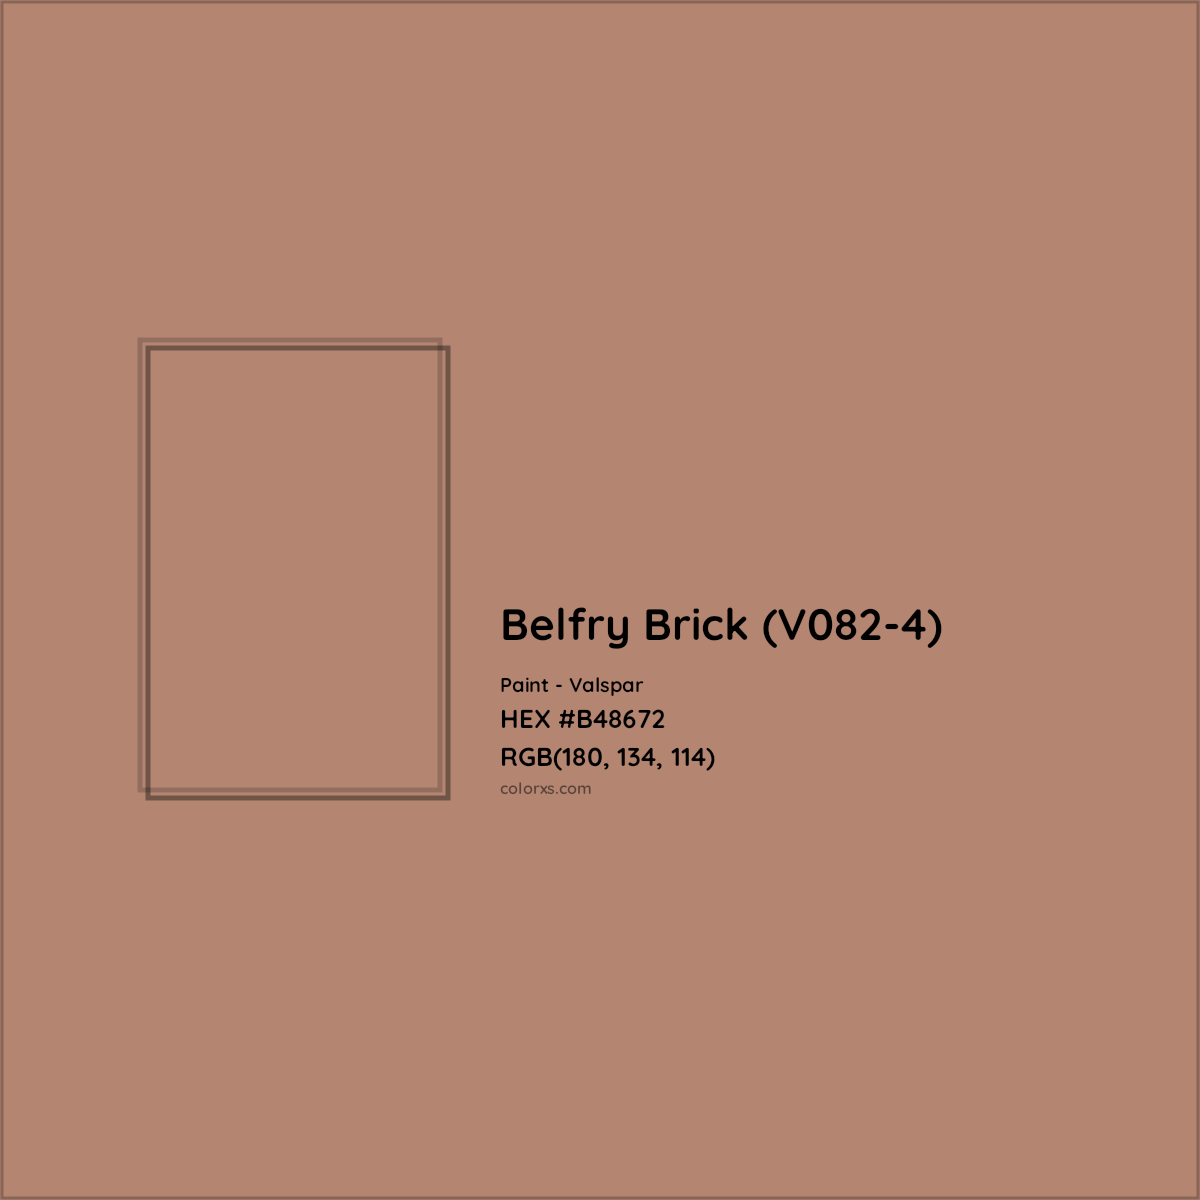 HEX #B48672 Belfry Brick (V082-4) Paint Valspar - Color Code